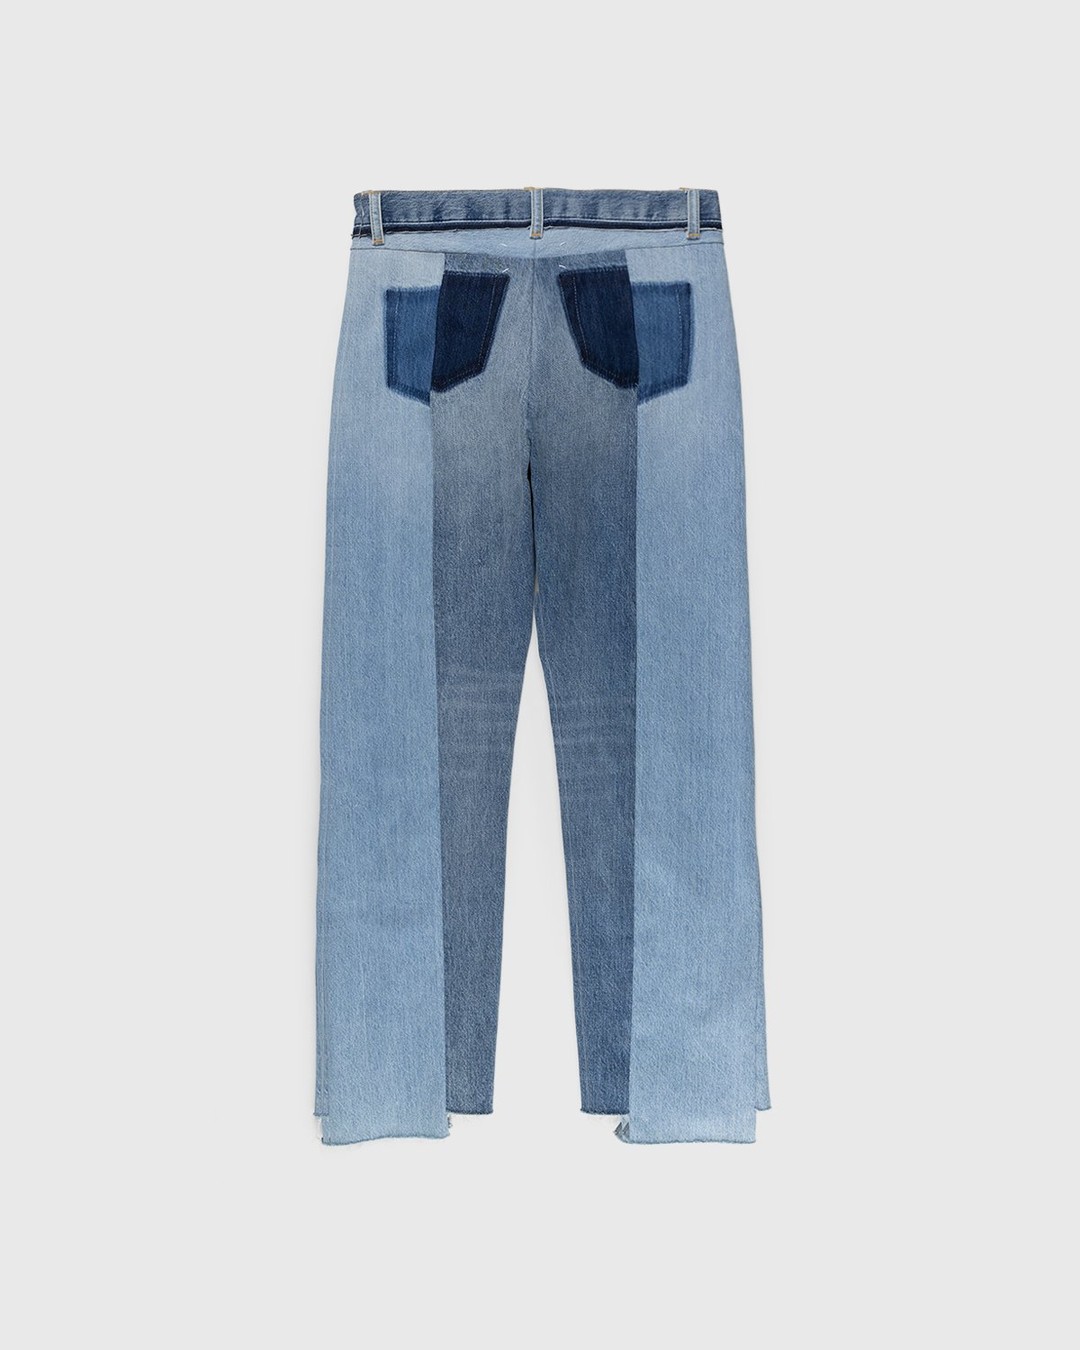 Maison Margiela – Spliced Jeans Blue - Denim - Blue - Image 2